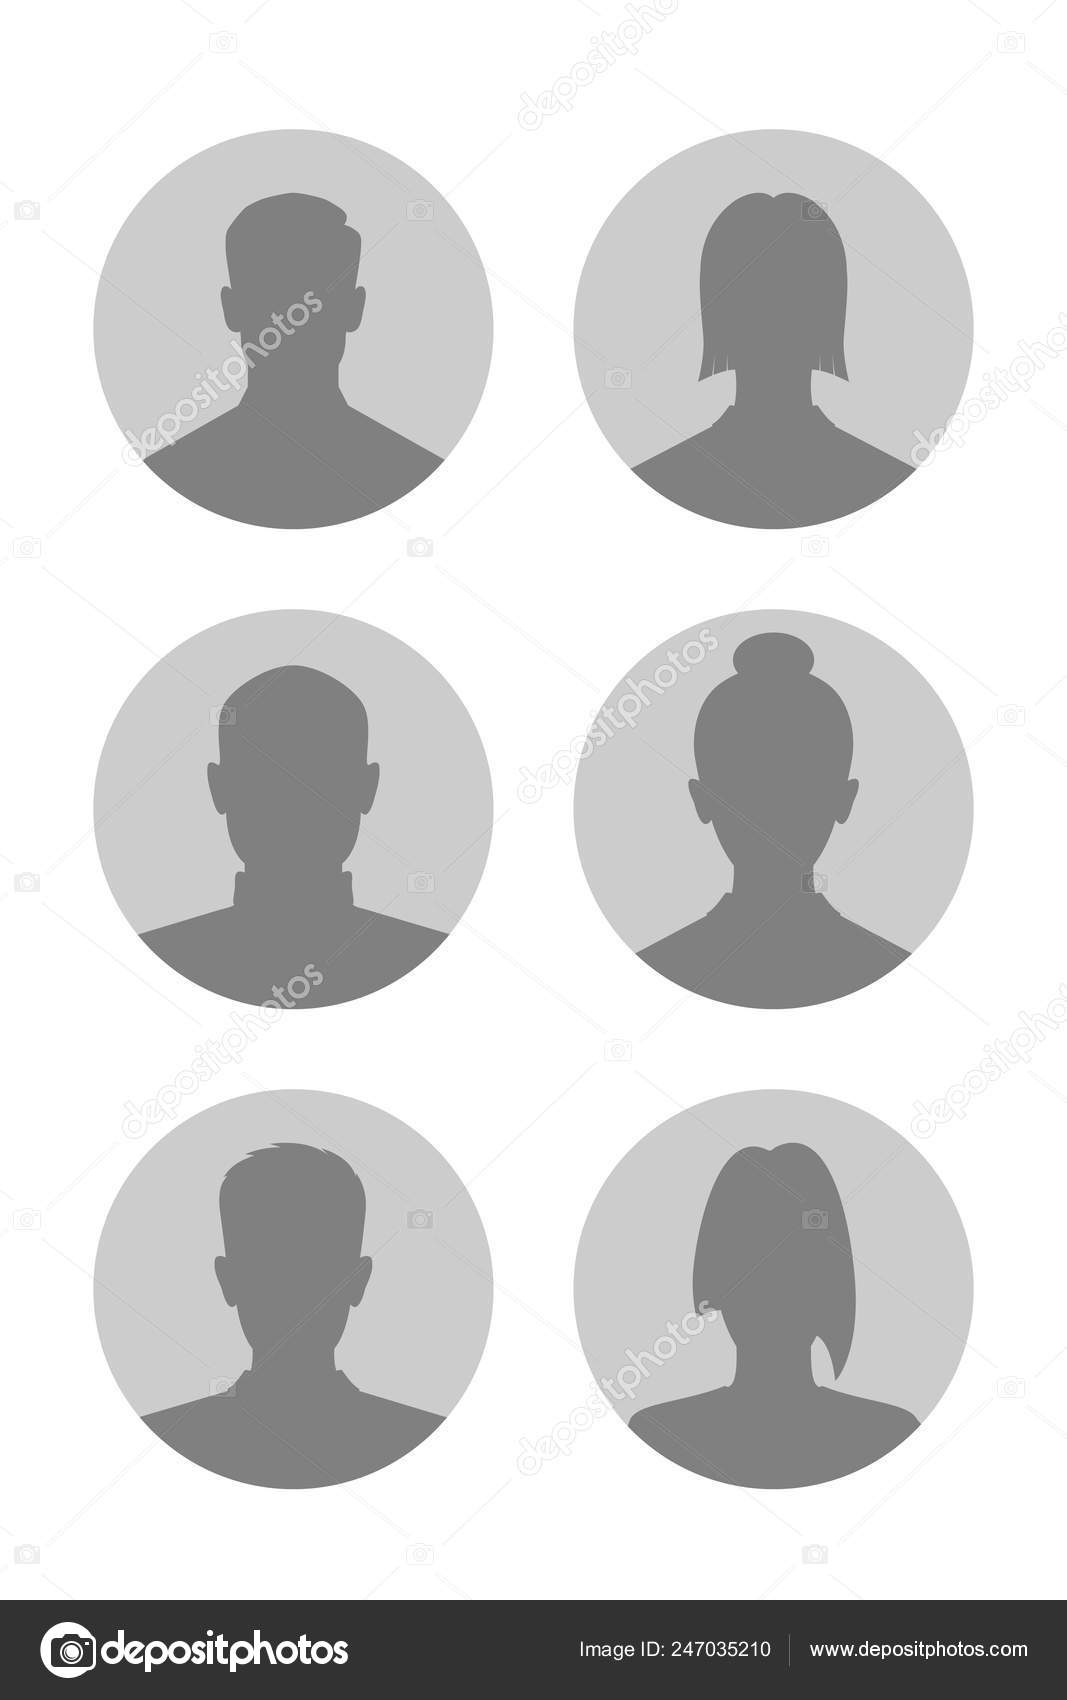 avatar, anonym, person, user, default, unknown, head icon